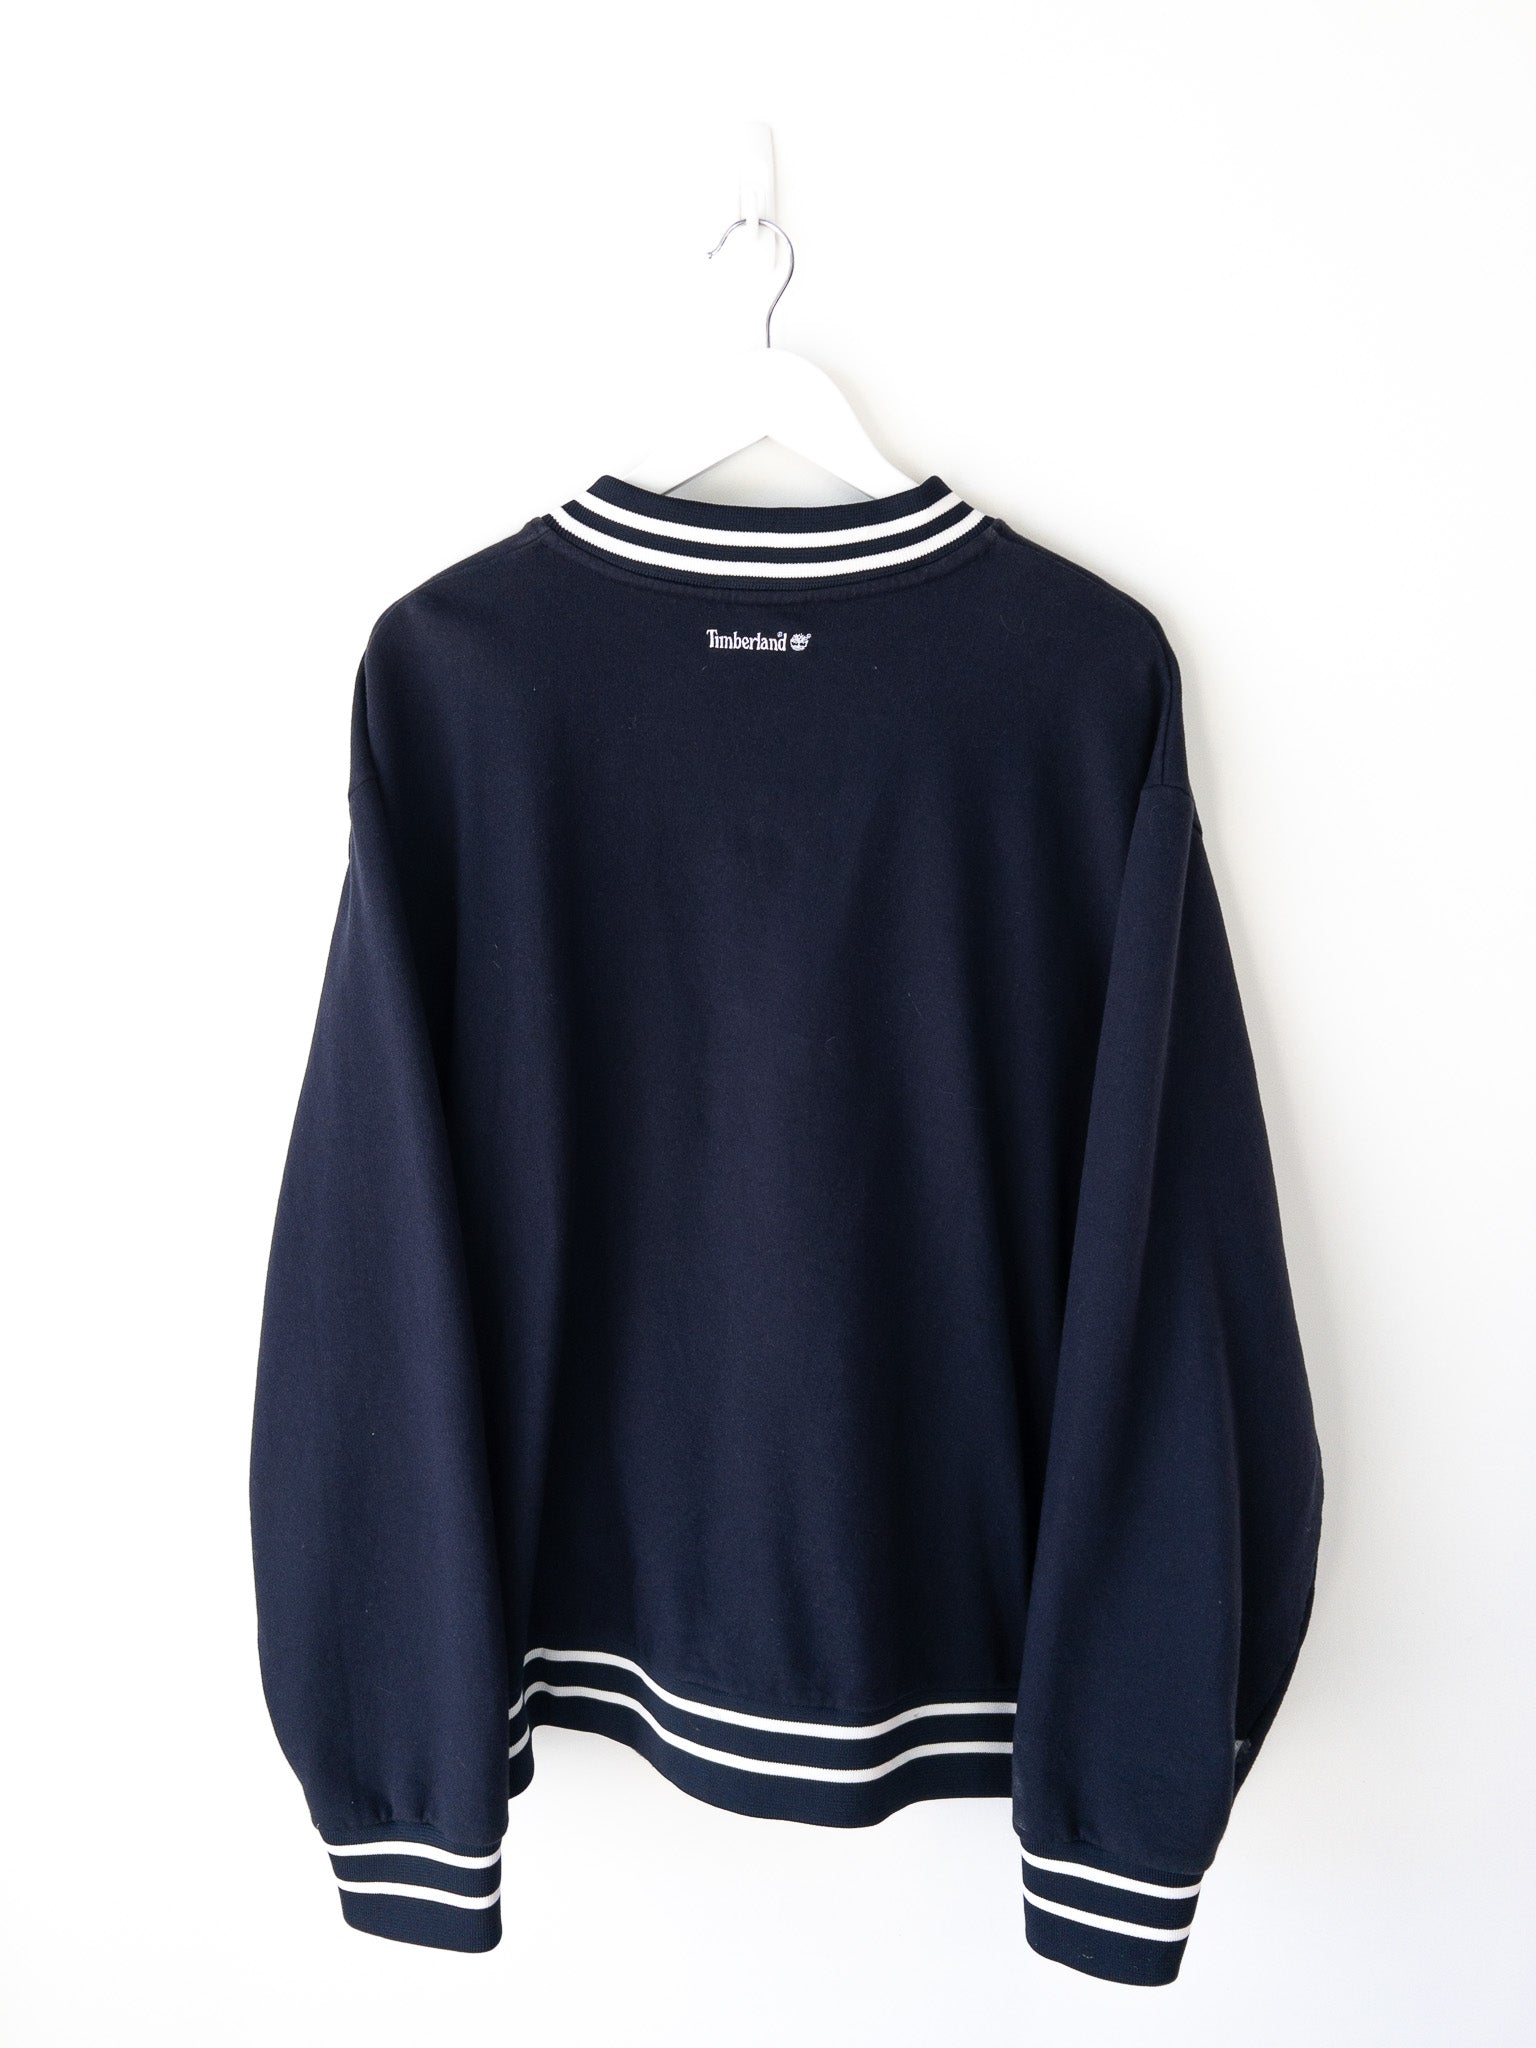 Vintage Timberland Quarter Zip Sweatshirt (XXL)